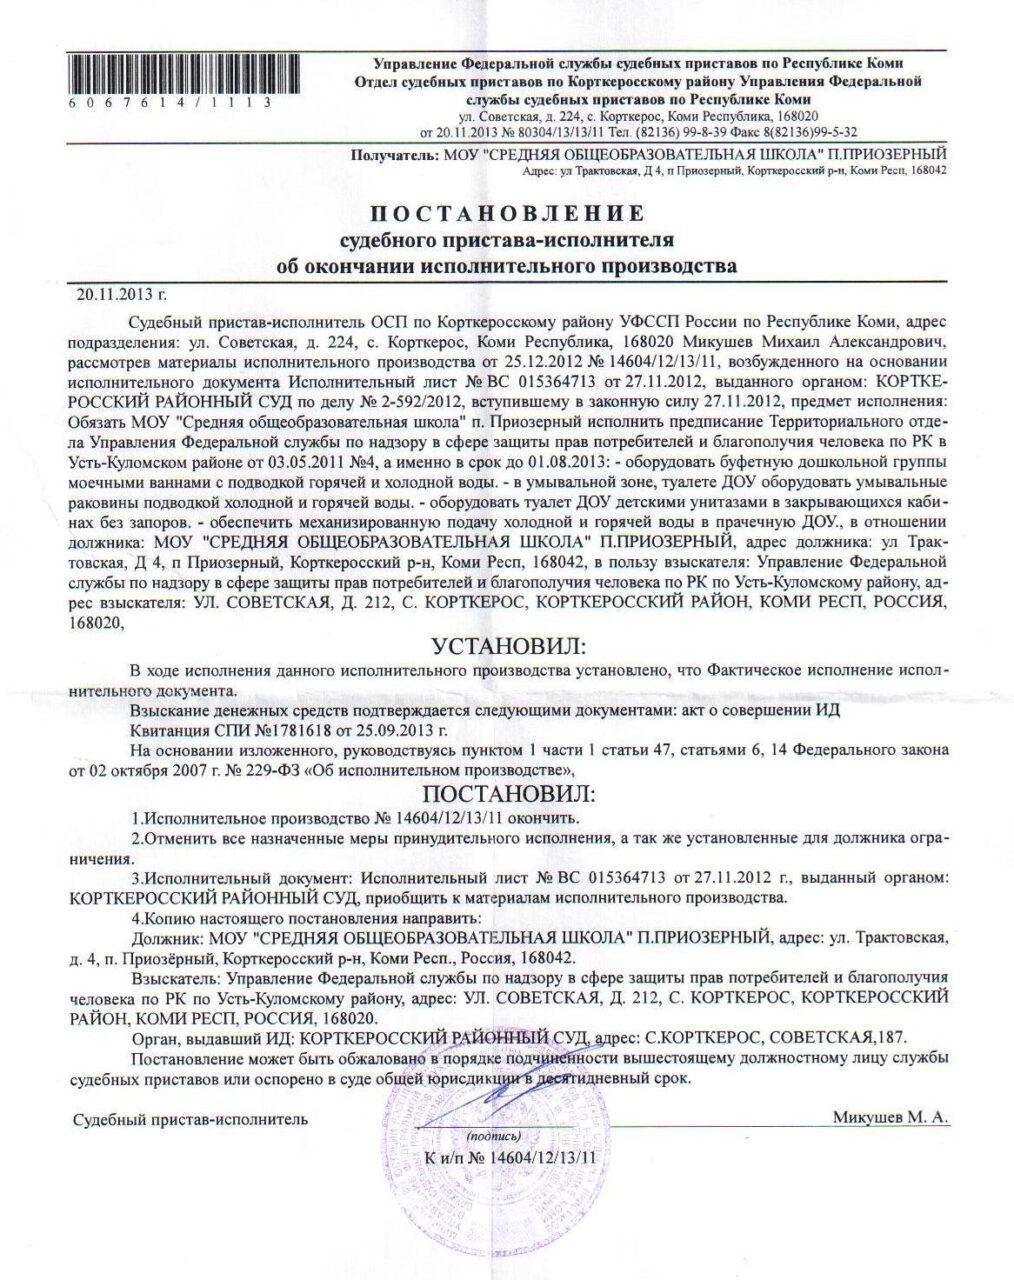 https://priozernyschool.3dn.ru/dokumenti/pismo_004.jpg